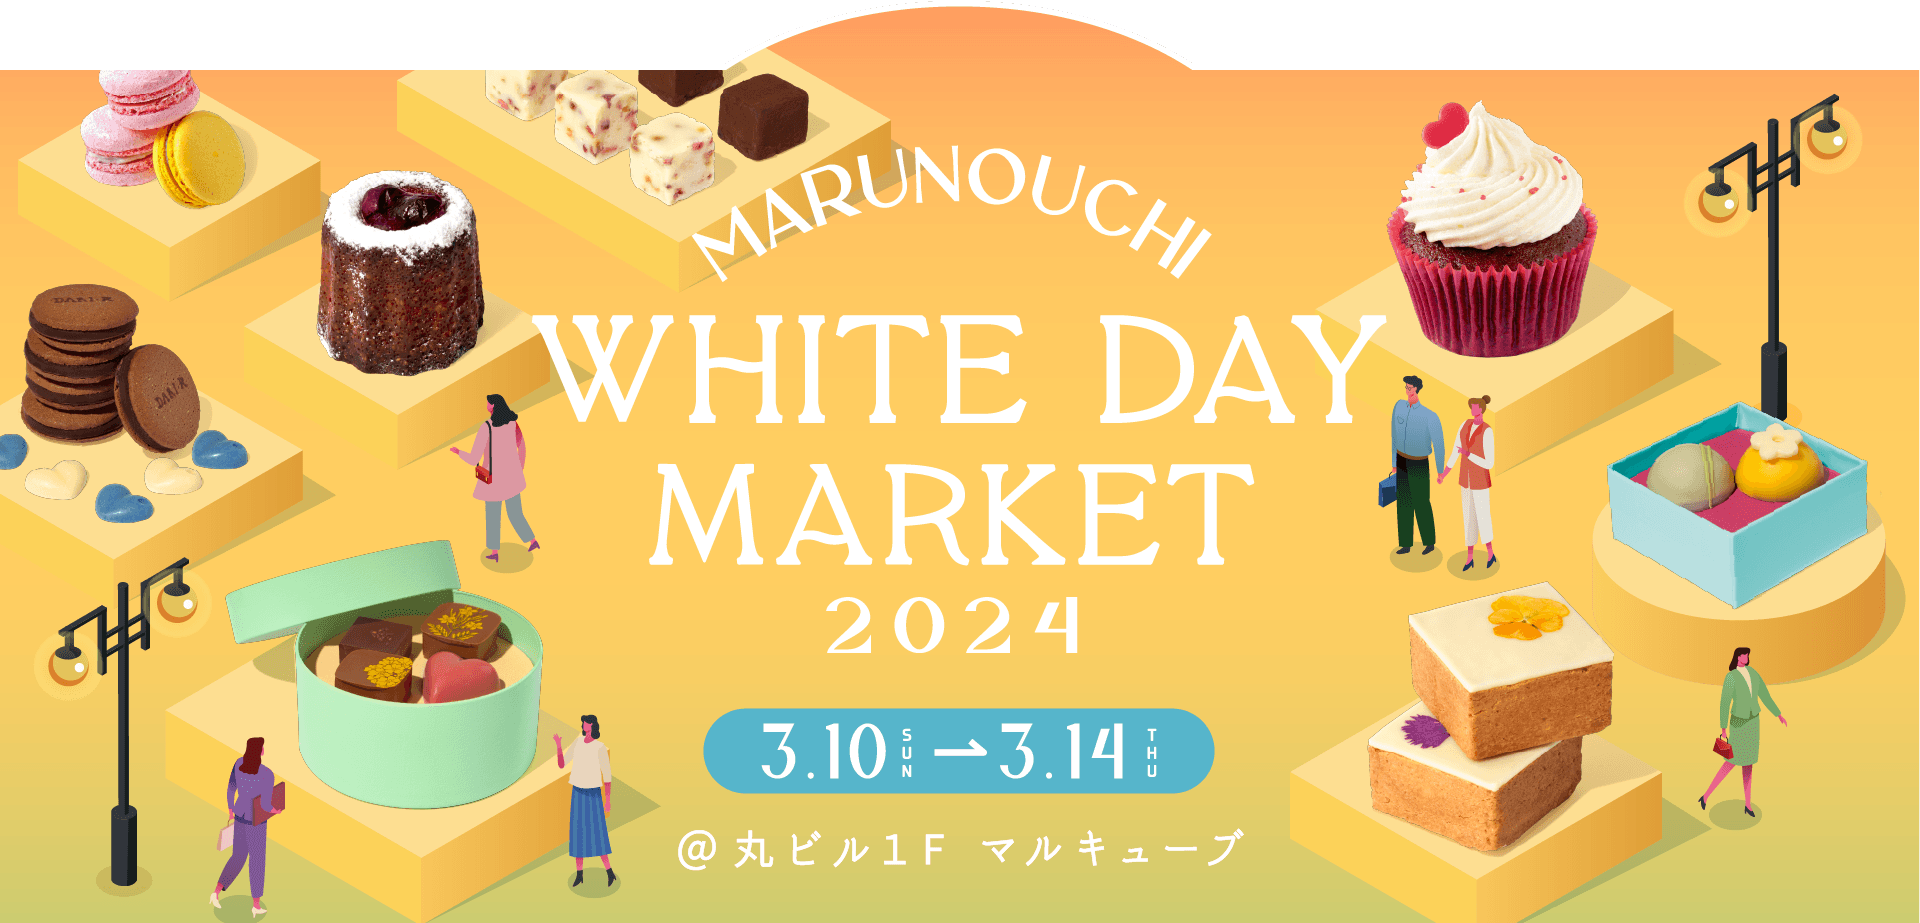 marunouchi white day market 2024 3.10 sun → 3.14 thu @丸ビル1F丸キューブ